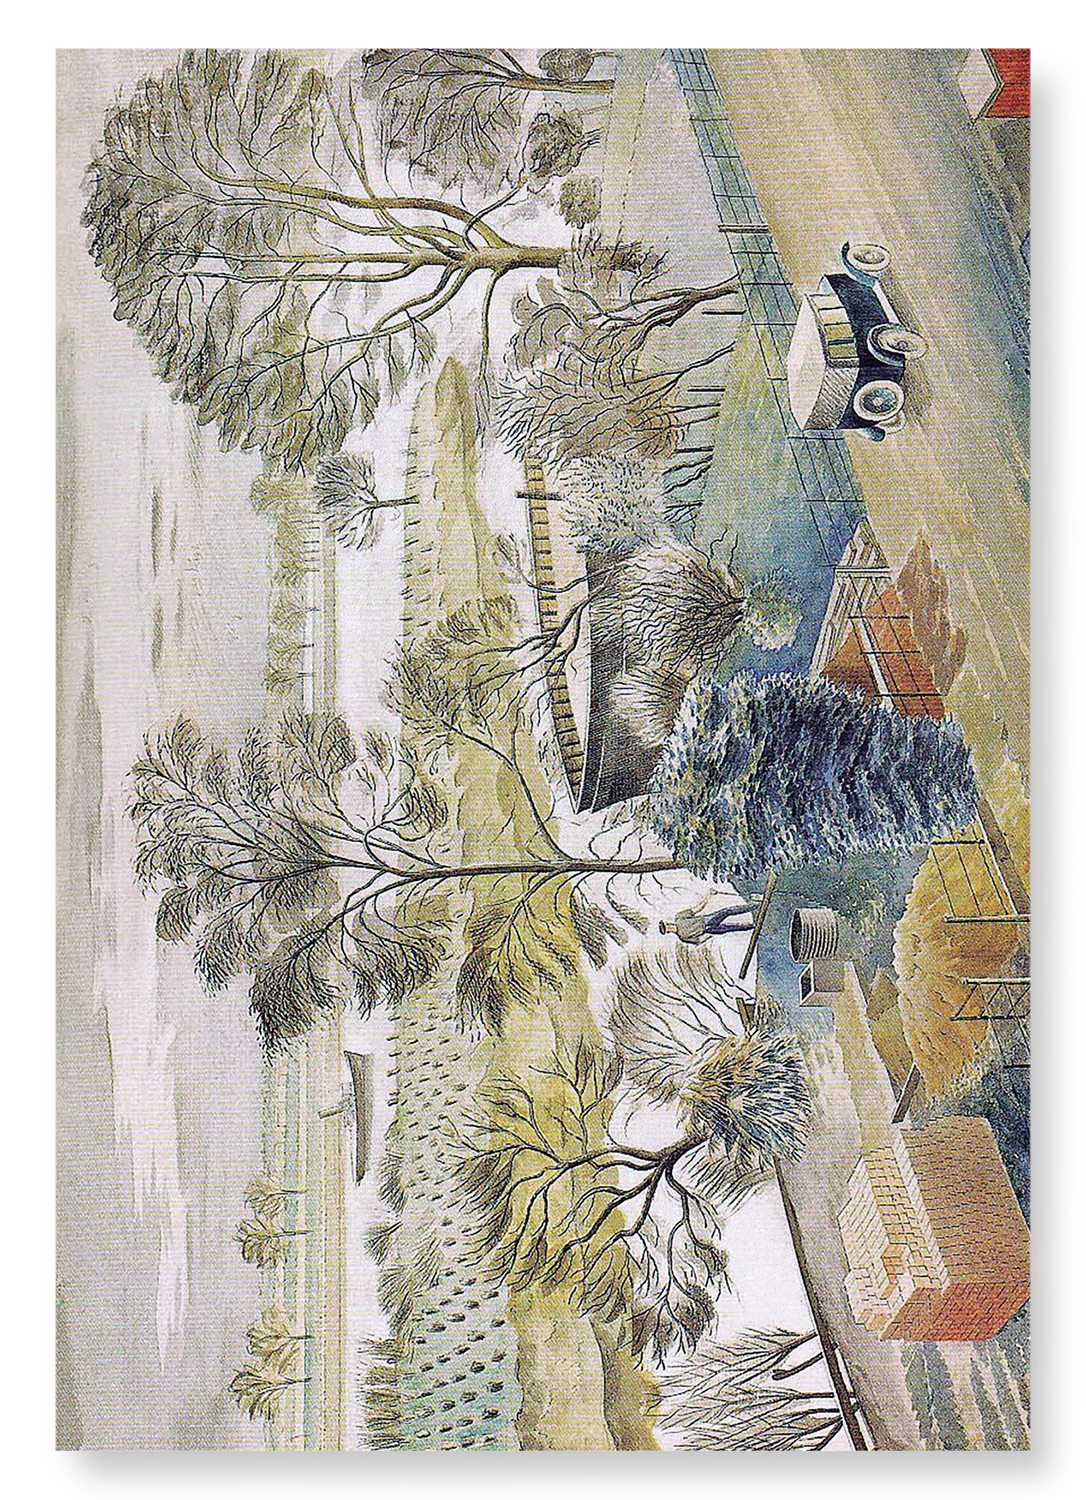 CHISWICK EYOT (1933): Painting Art Print